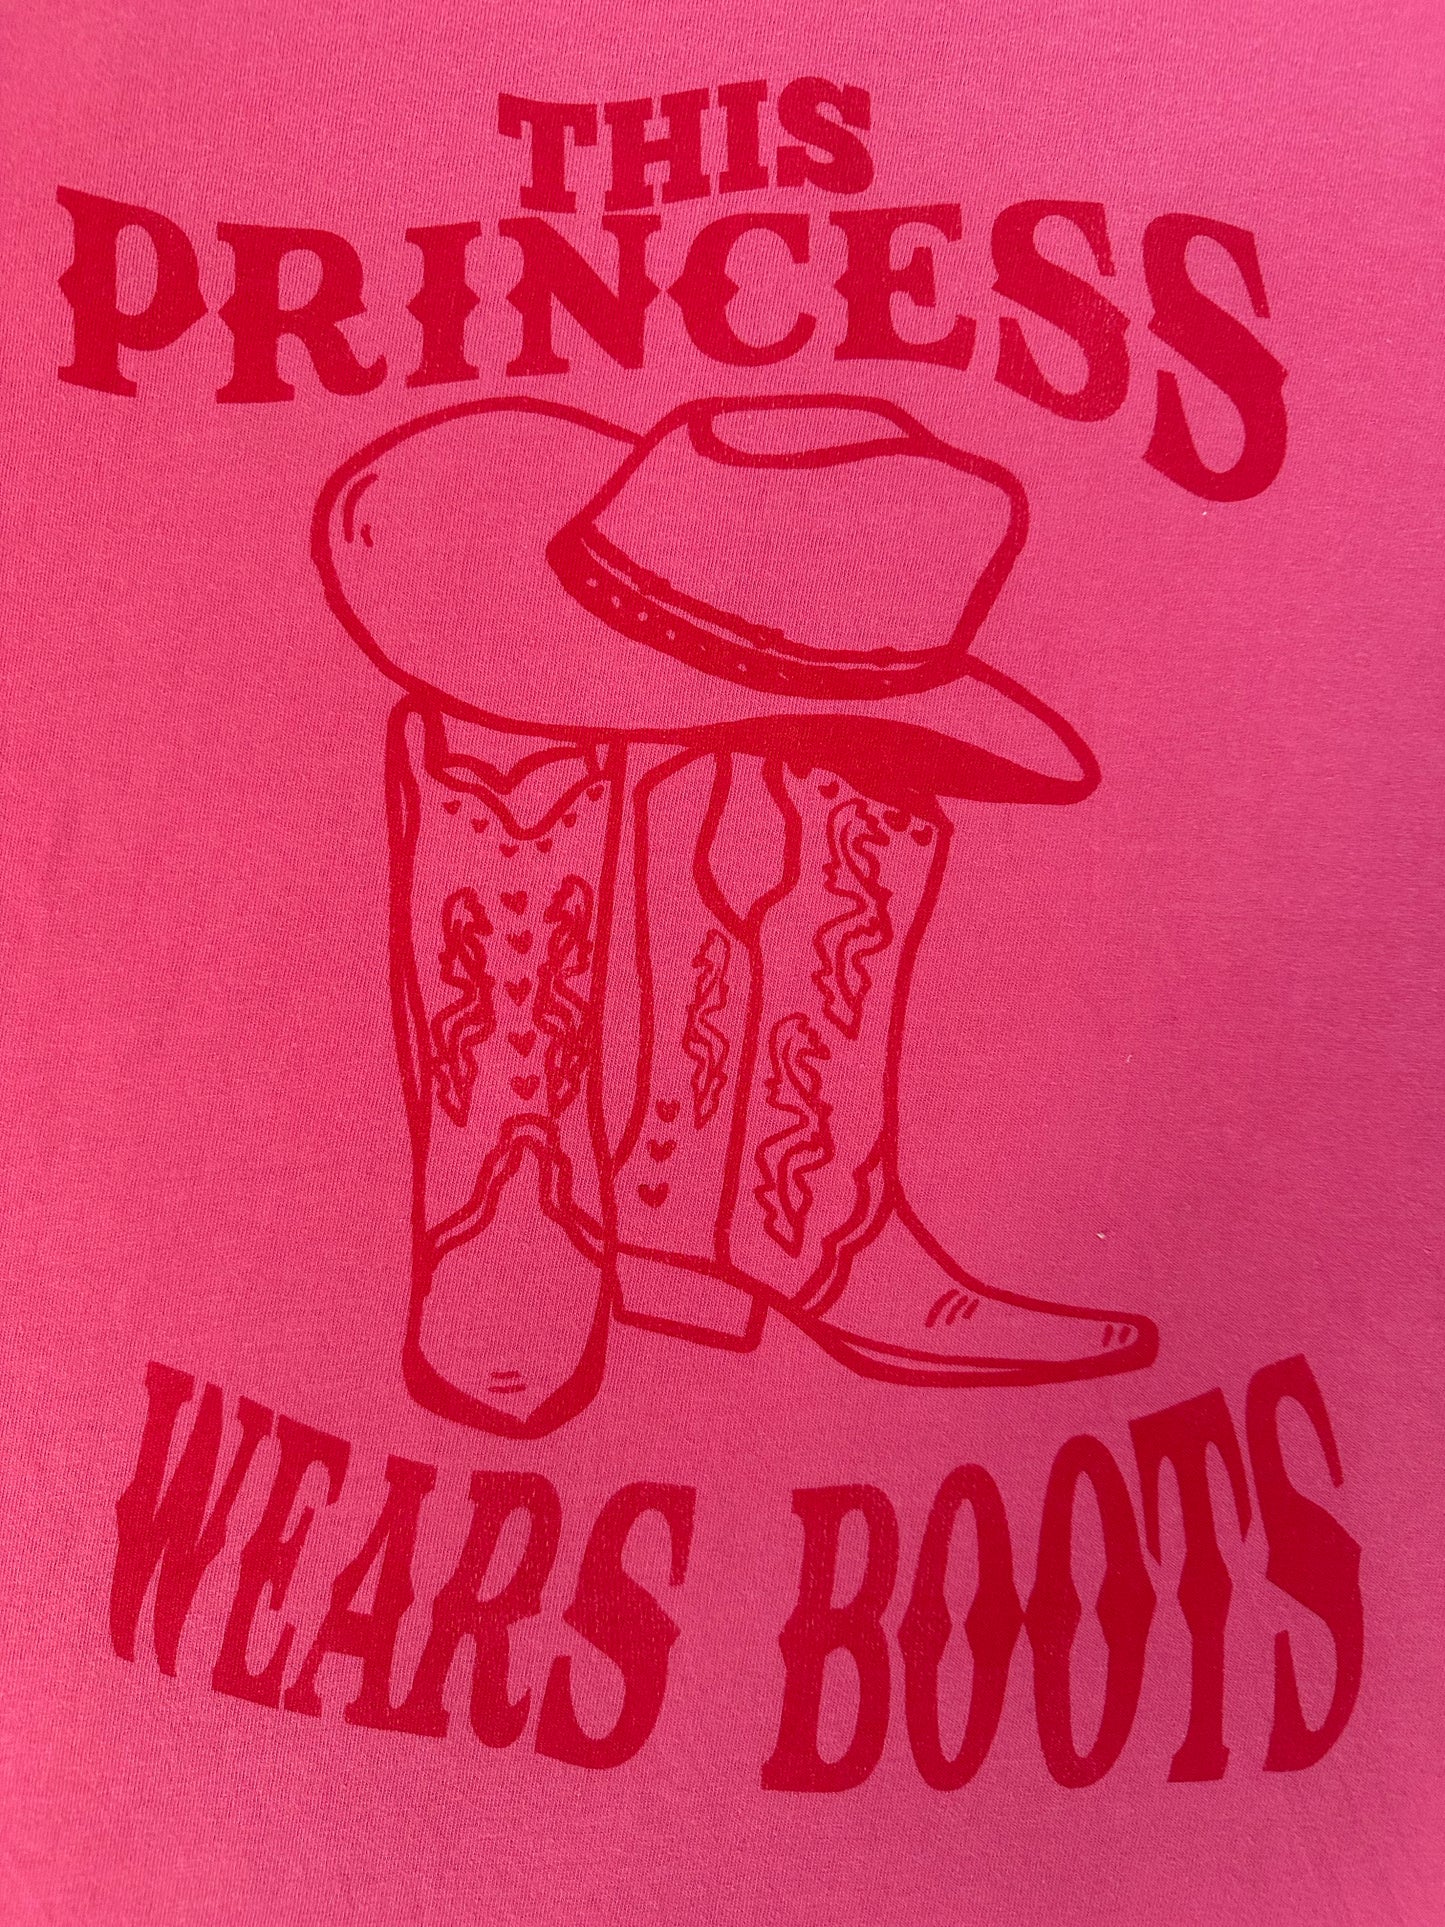 Princess Wears Boots